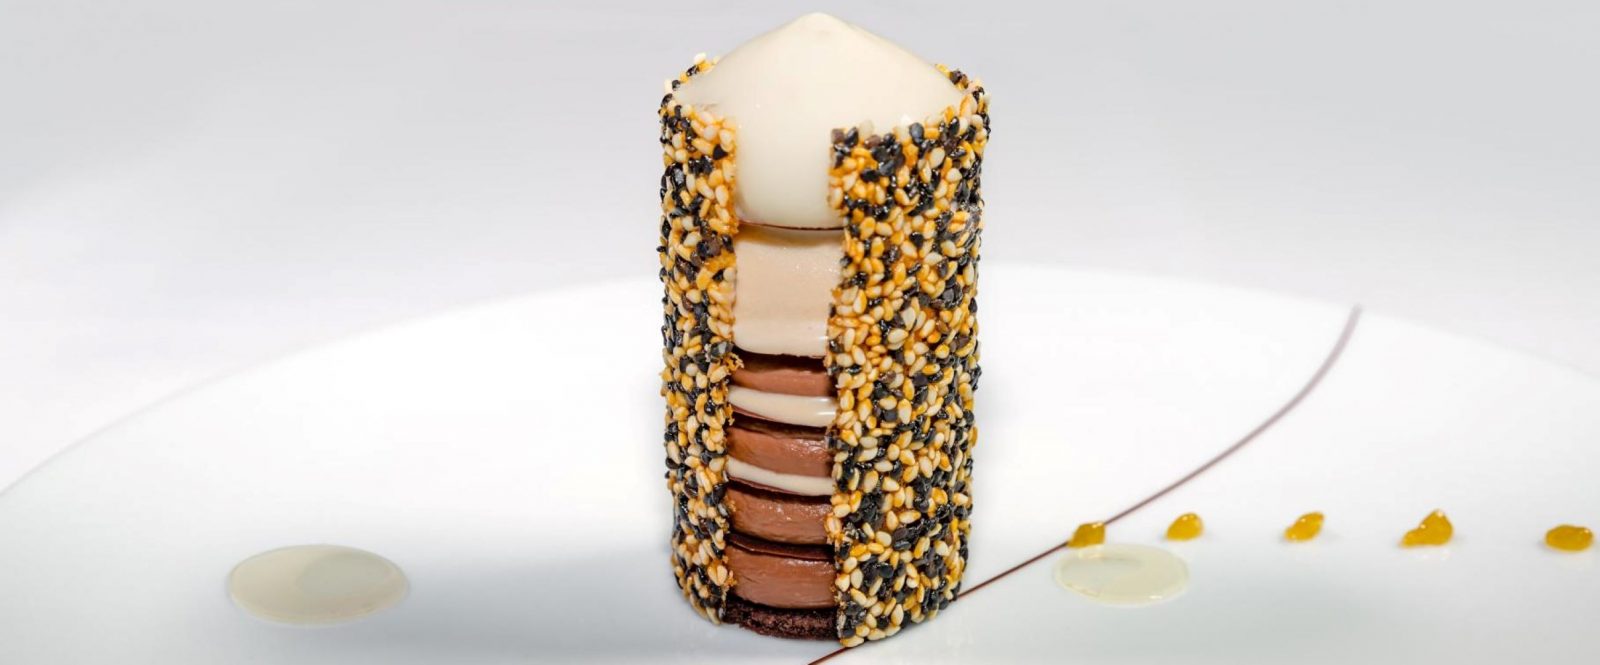 STJ_Cítricos—chocolate-Crispy-tub-of-sesame-and-cacao-biscuit-with-fleur-de-sel-Creamy-ganache-and-fresh-yuzu-marmalade-Crane-helado- Rights-Nicolas-Claris –5- (2)